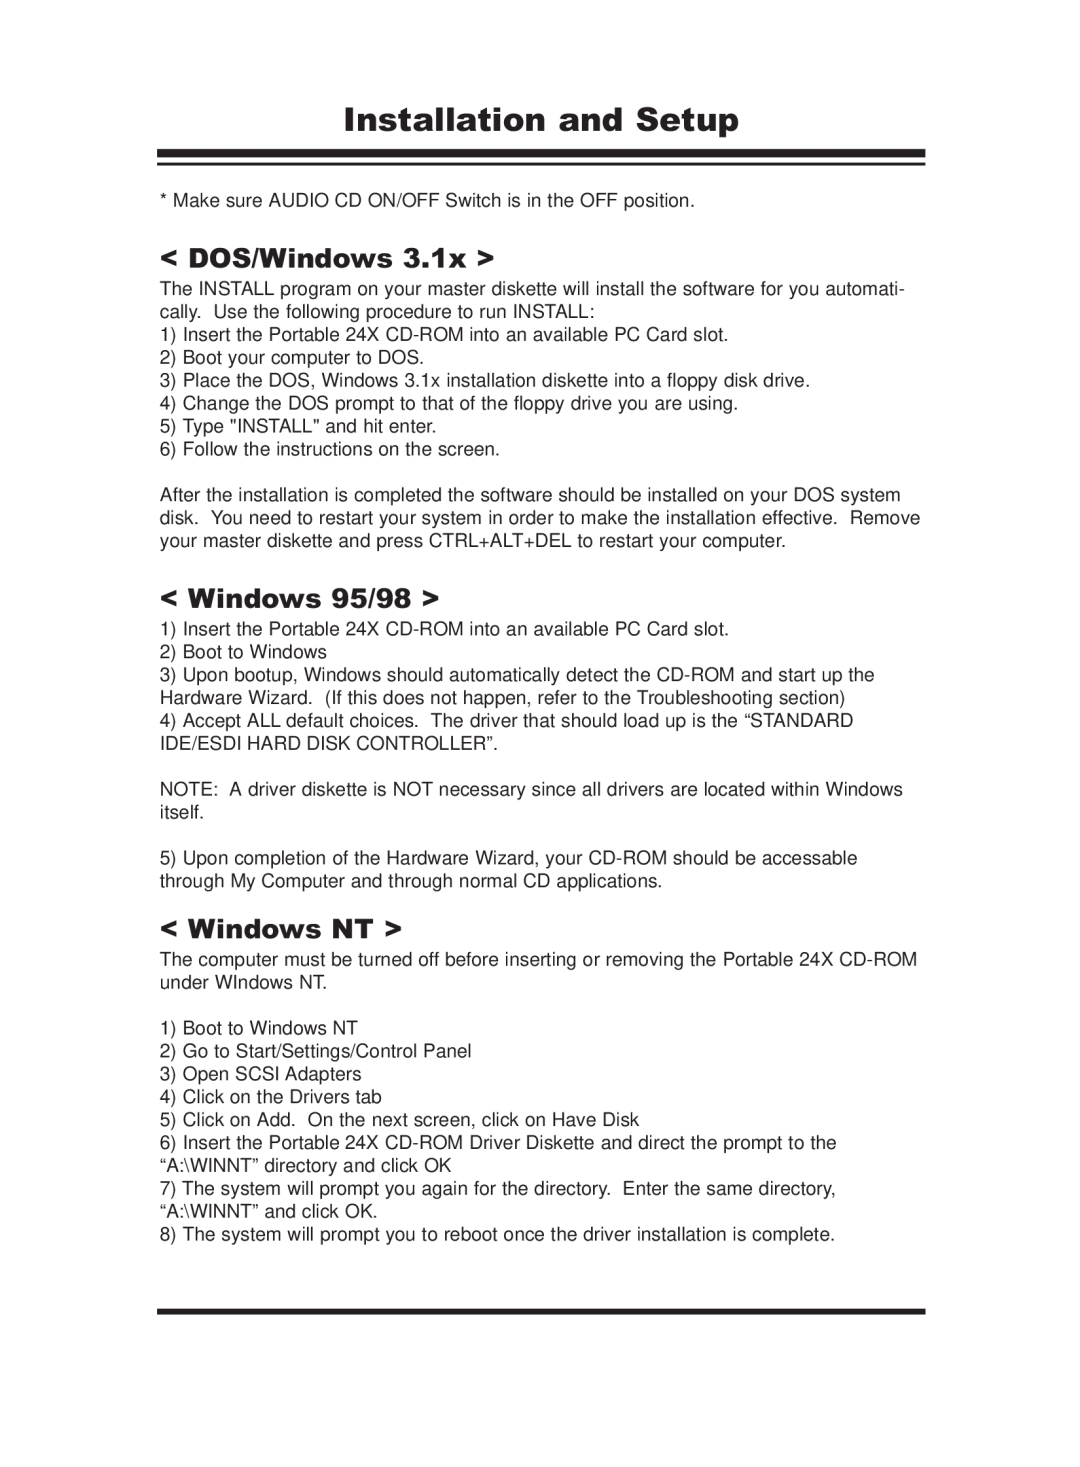 PORT ST24XCDR user manual Installation and Setup, DOS/Windows, Windows 95/98, Windows NT 